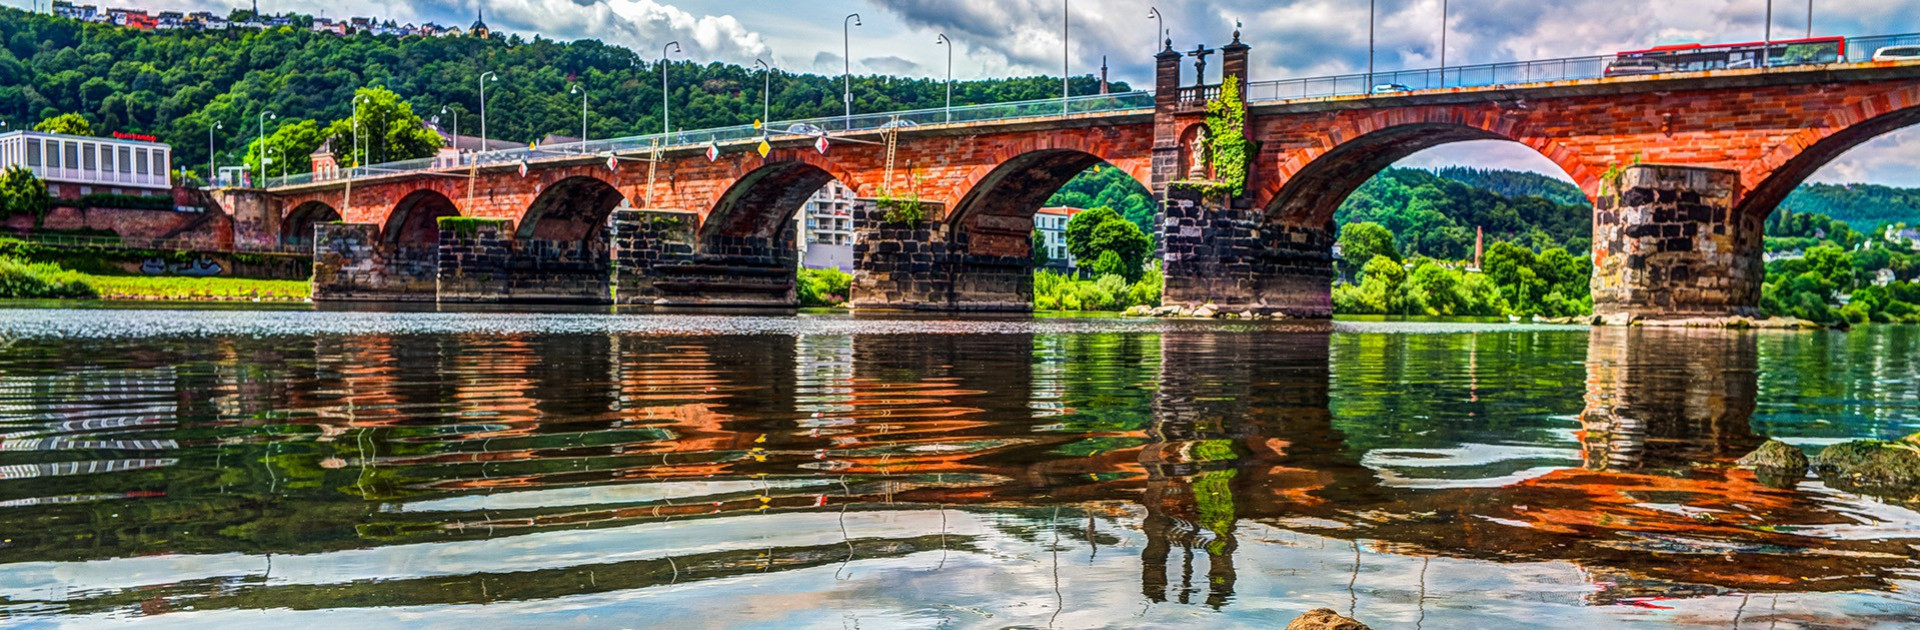 Roman Bridge and Moselle - © Romas_Photo/shutterstock.com